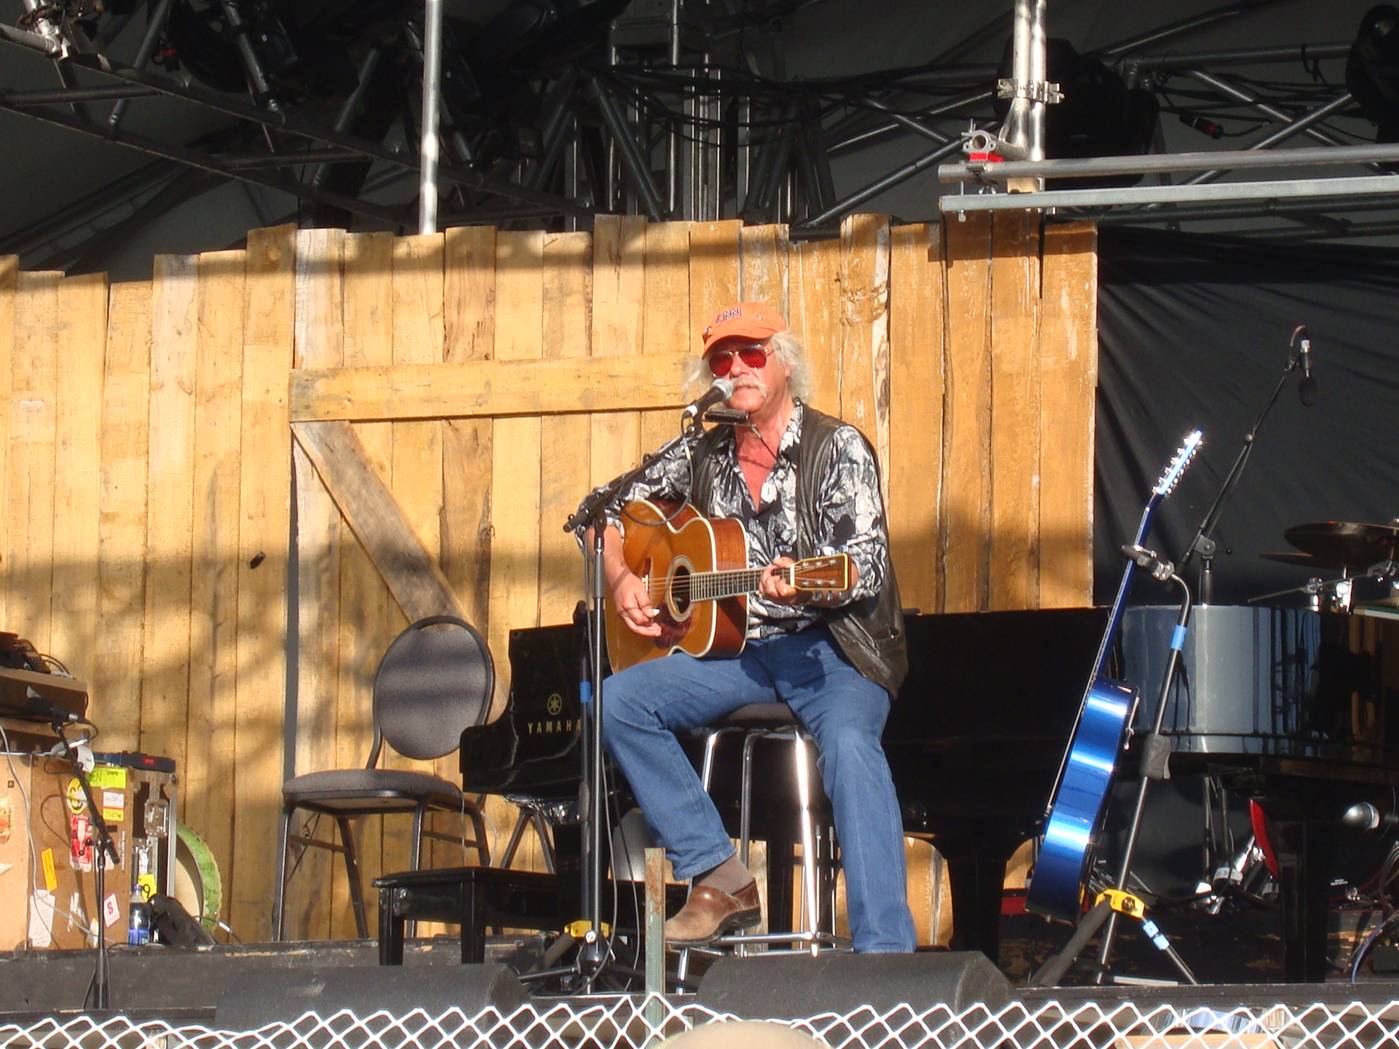 Arlo Guthrie on stage at the Winnipeg Folk Festival 2009.  Consummate performer.